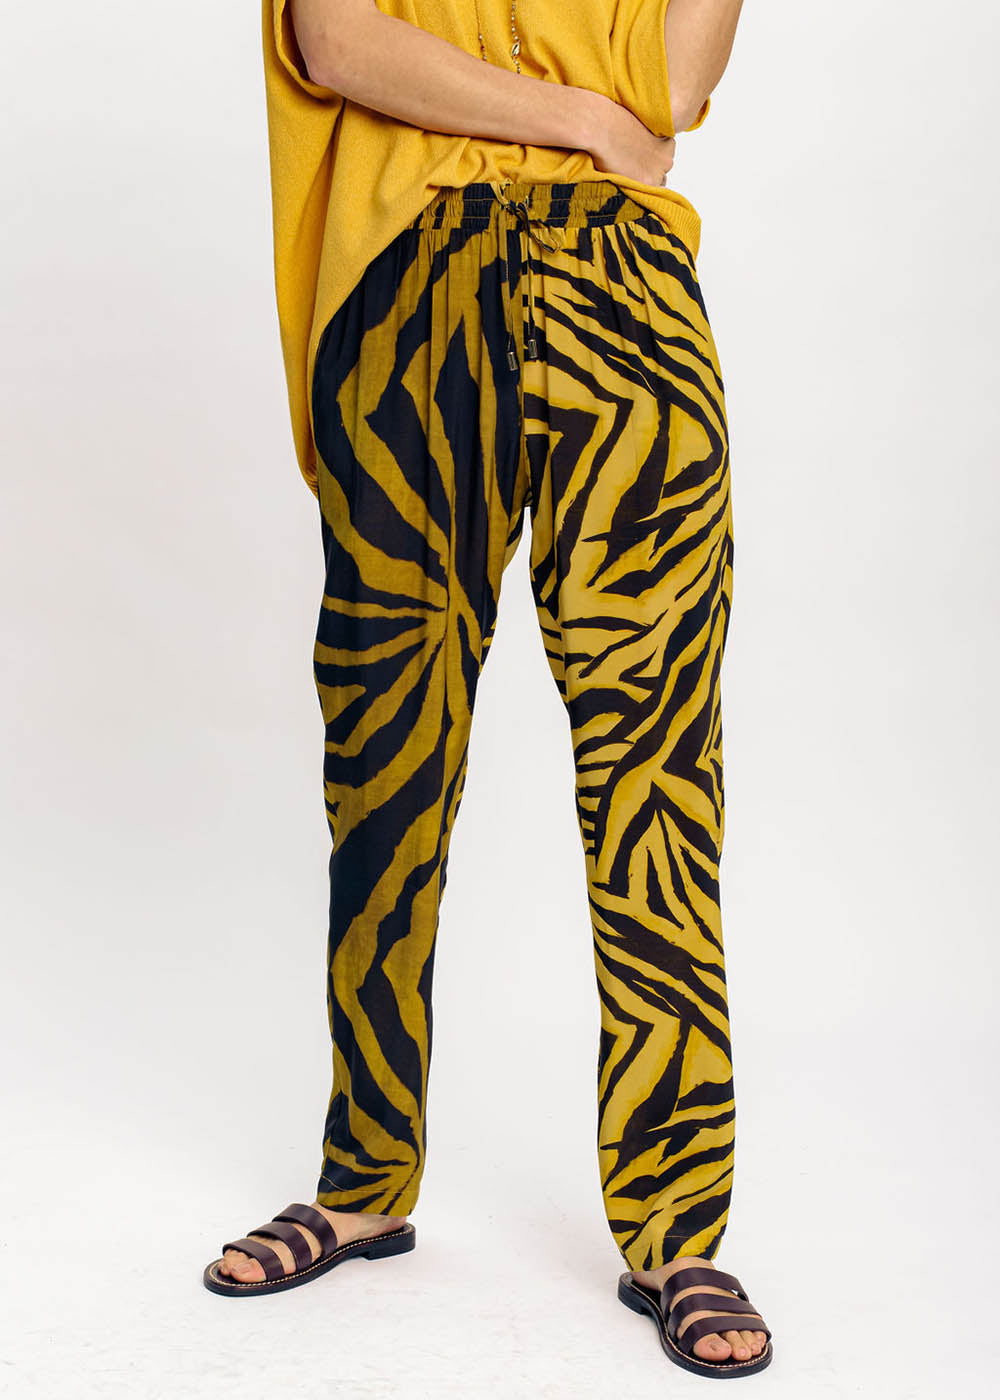 Zebra printed pants